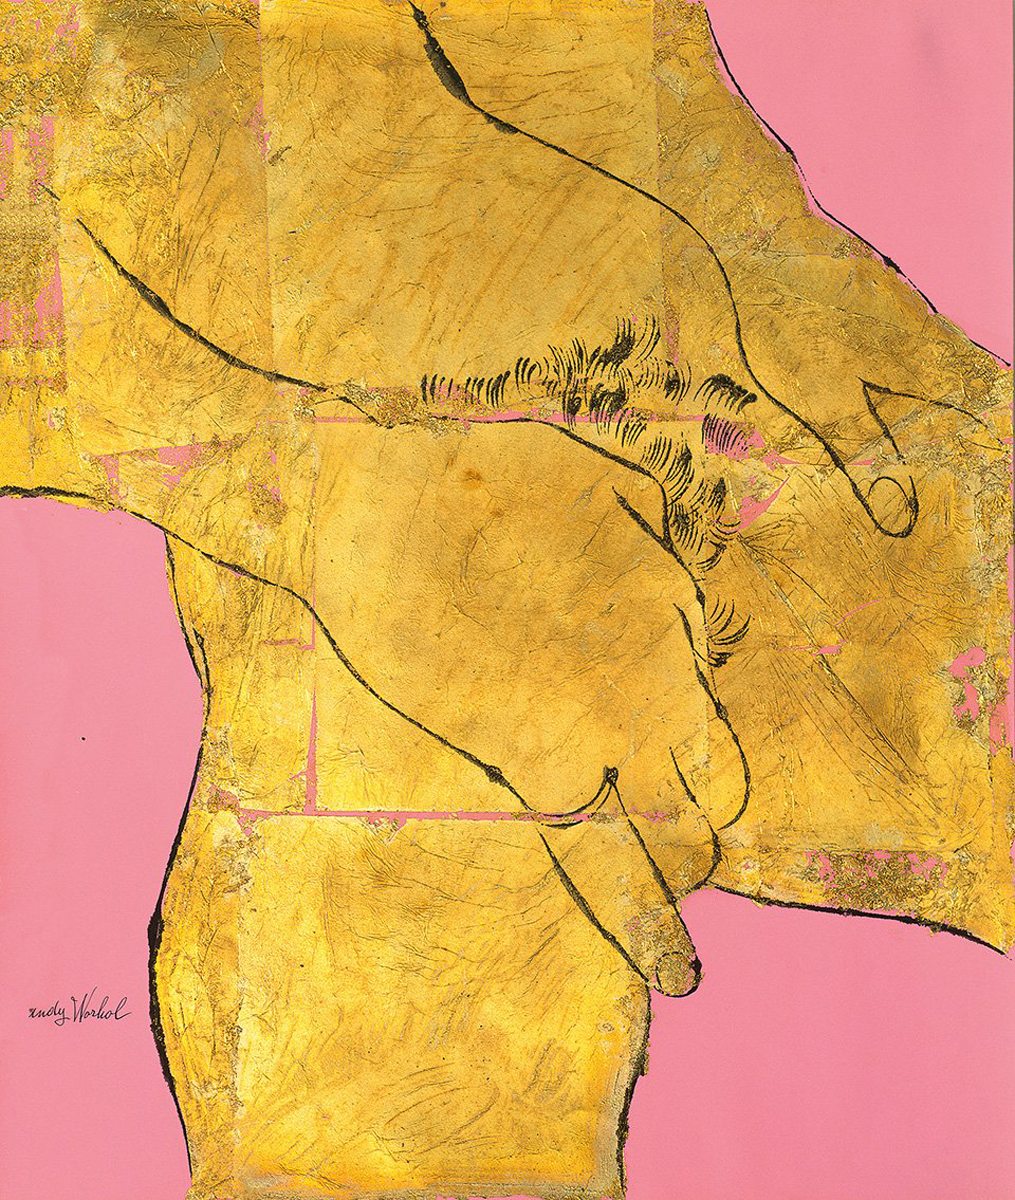 Andy Warhol, “Male Nude Lower Torso” (1956–57).